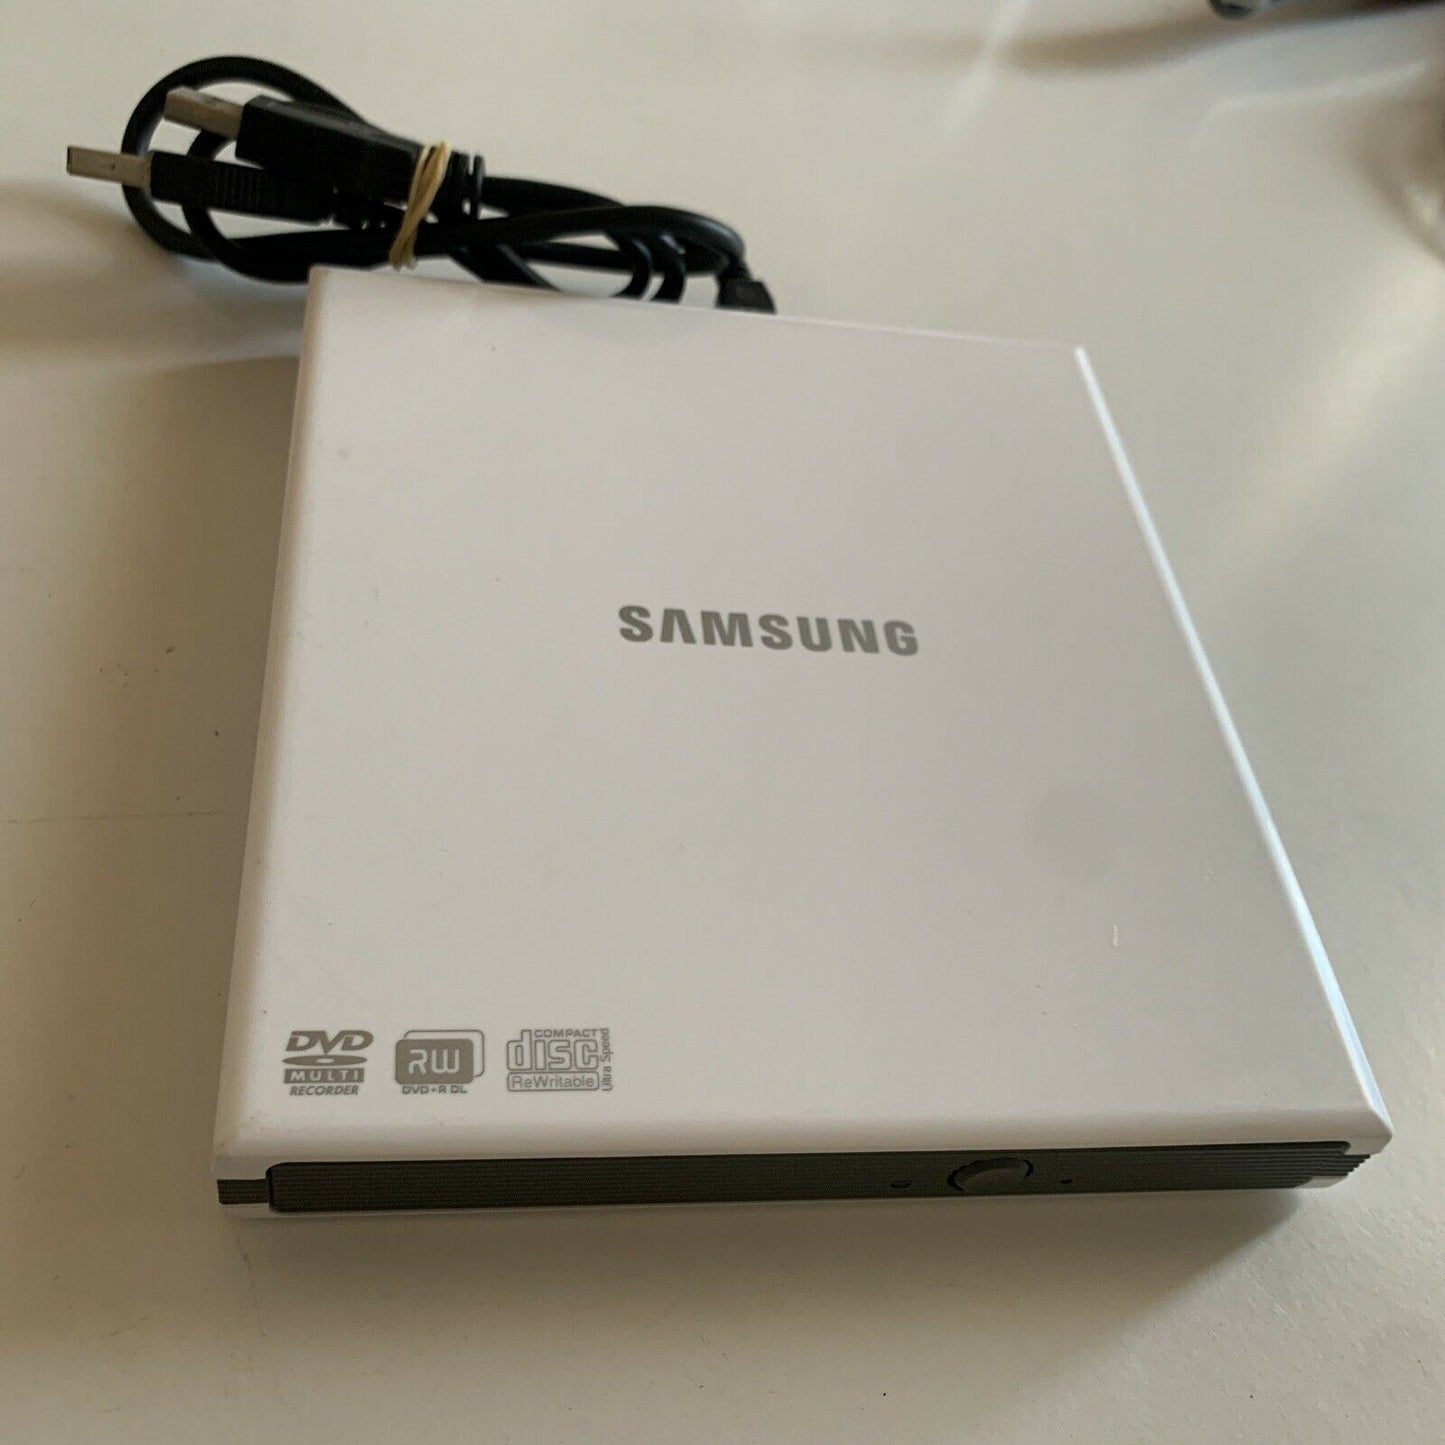 Samsung SE-S084 Portable Slim External DVD Writer USB Self Powered